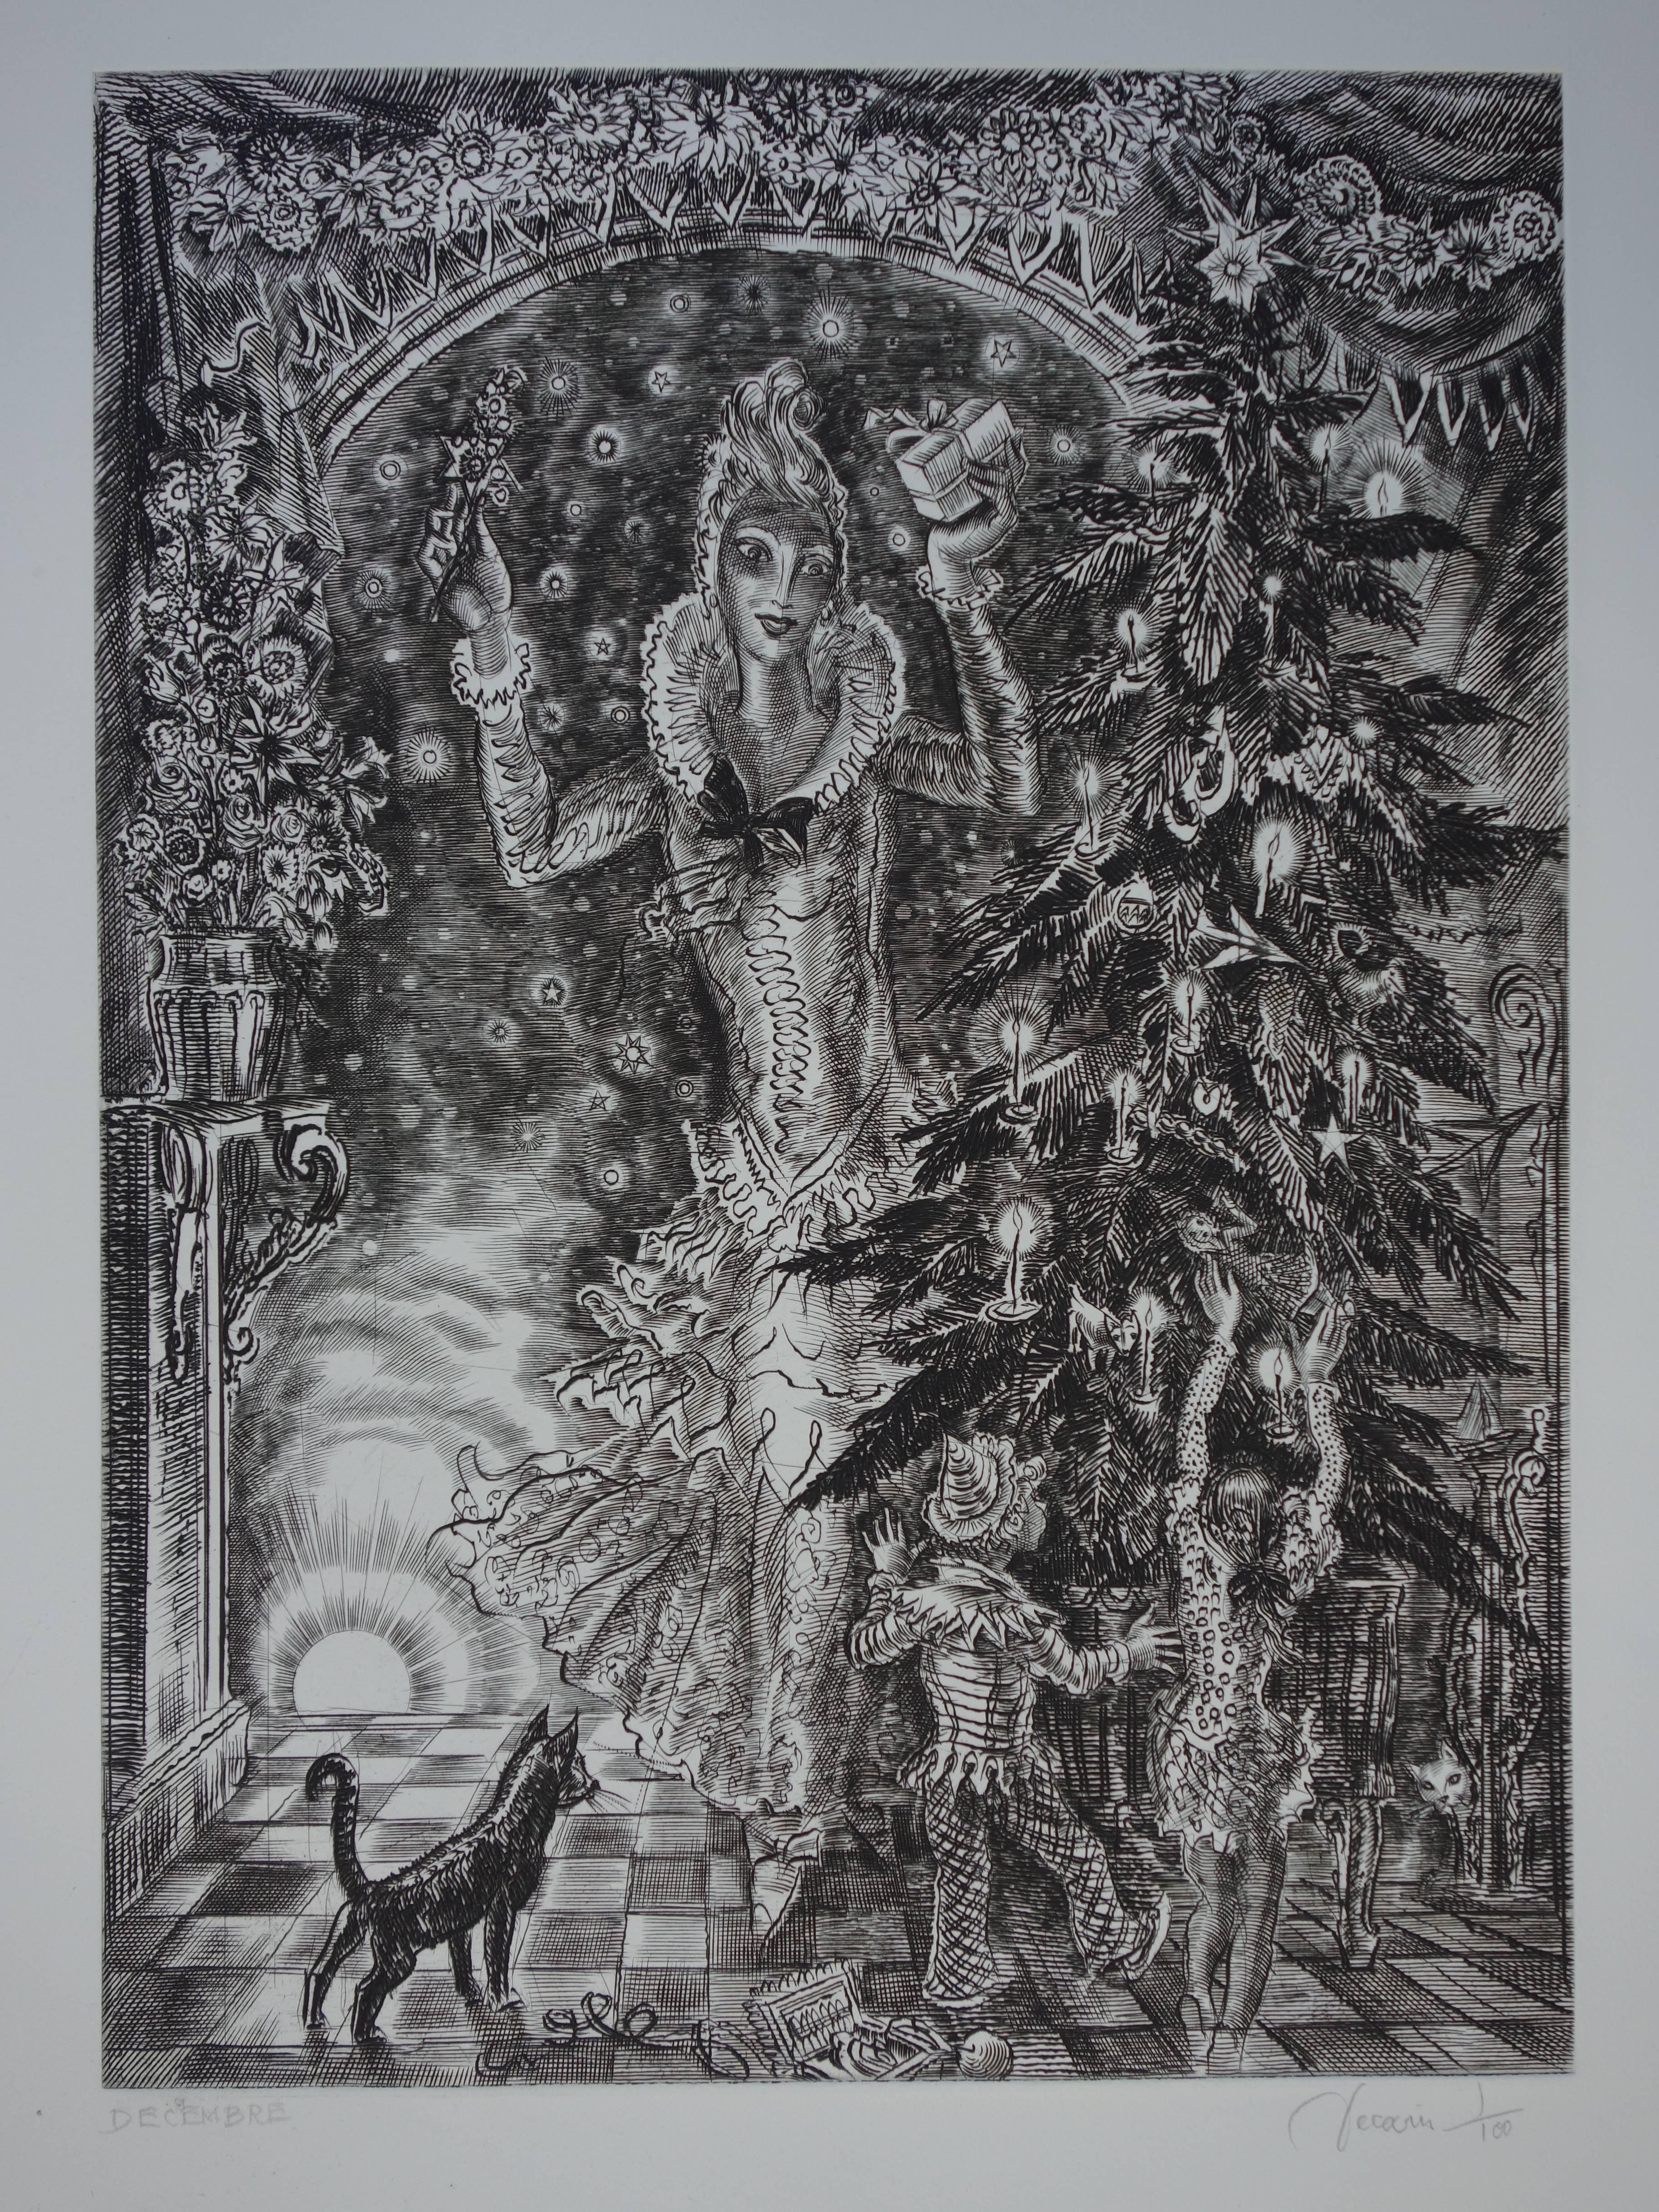 December : Christmas Tree - Original handsigned etching - Exceptional n° 1/100